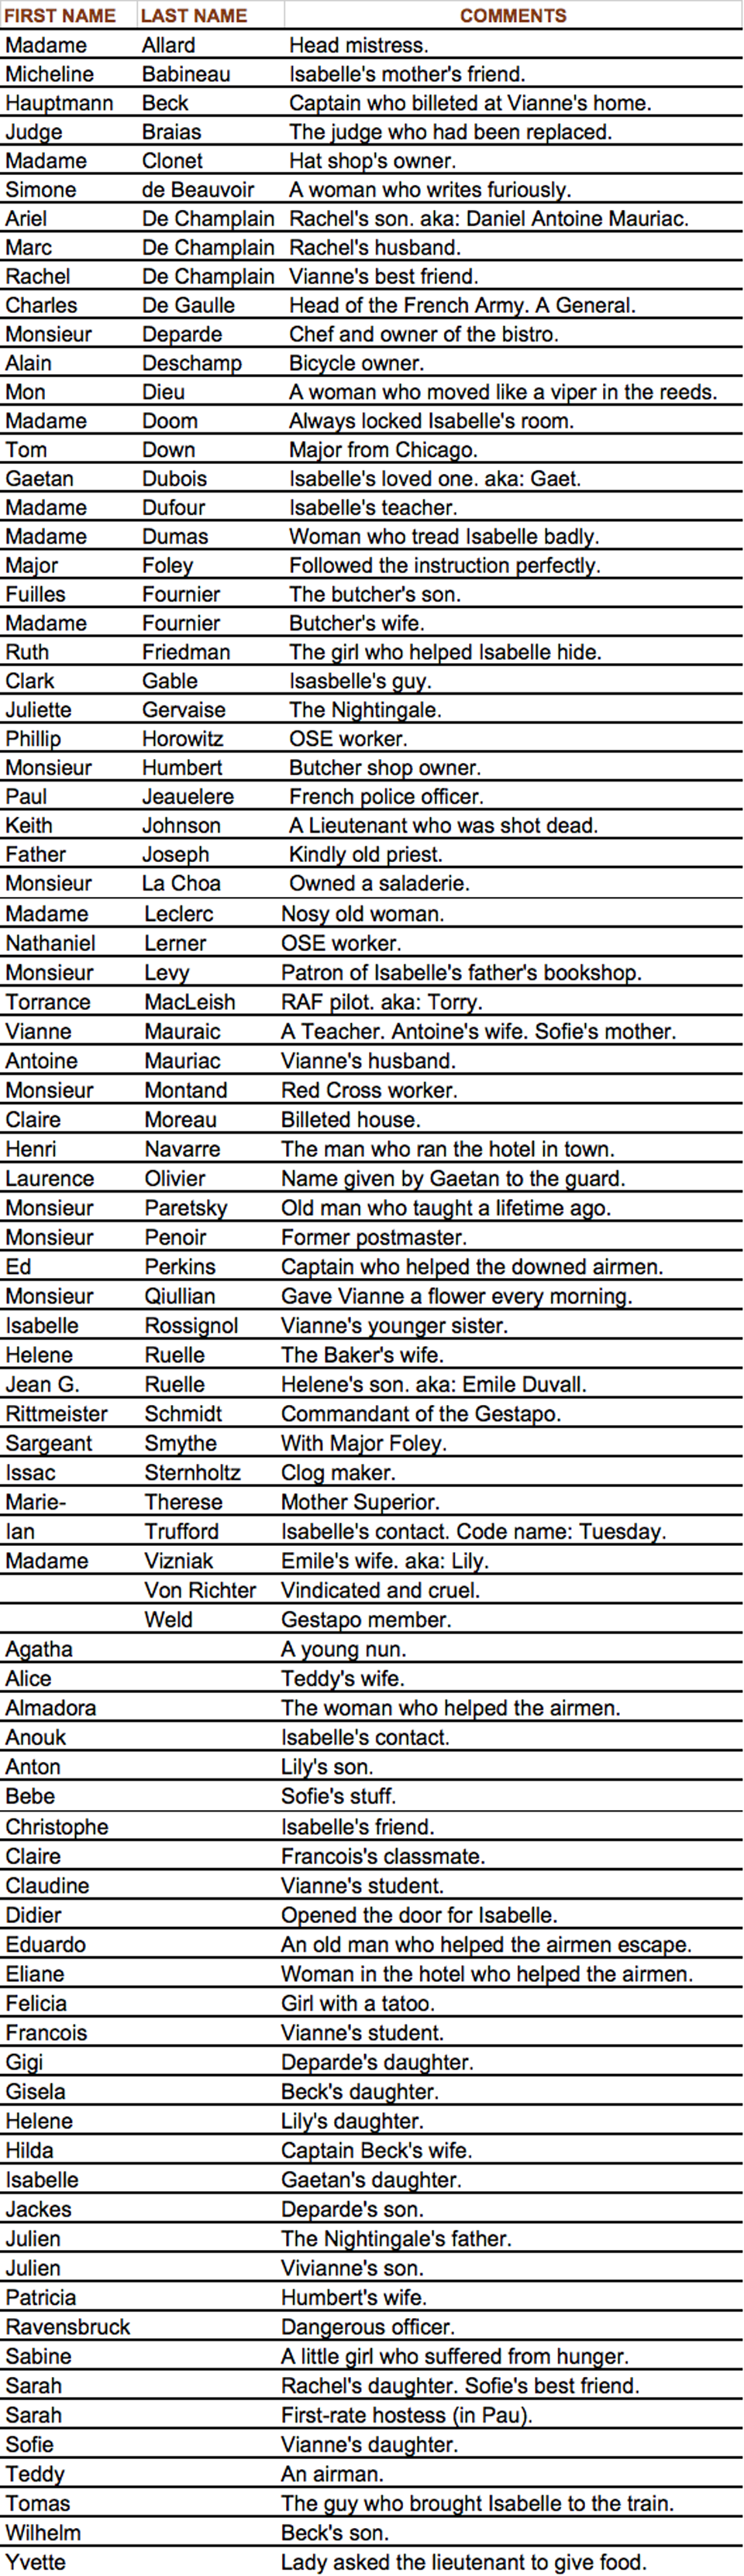 The Nightingale Name List